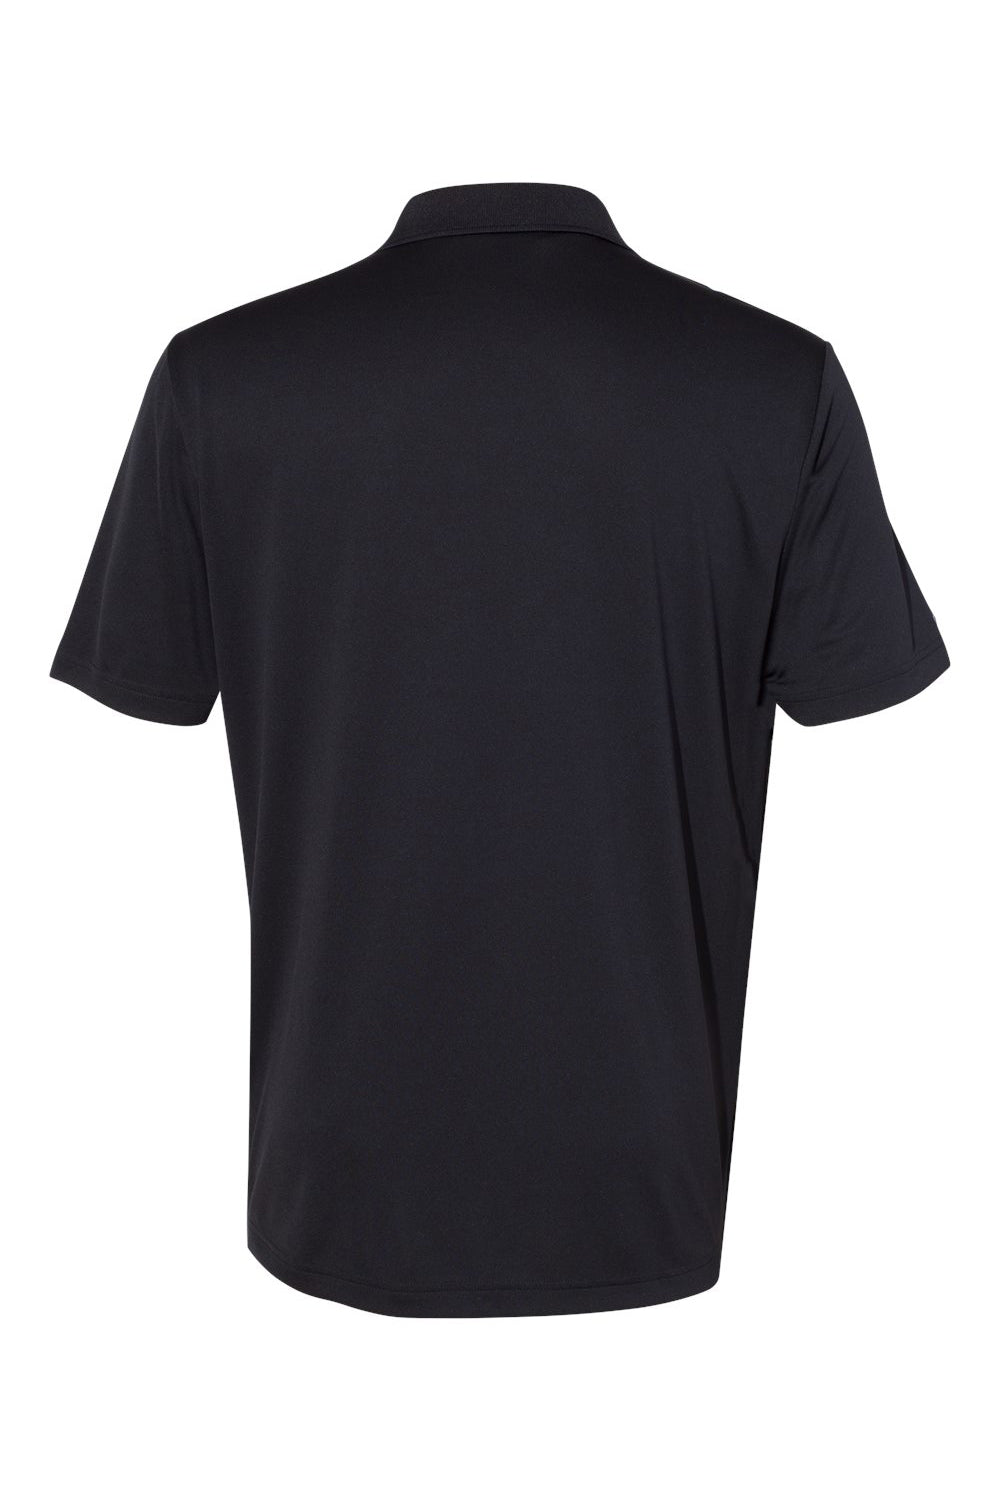 Adidas A230 Mens Performance Short Sleeve Polo Shirt Black Flat Back